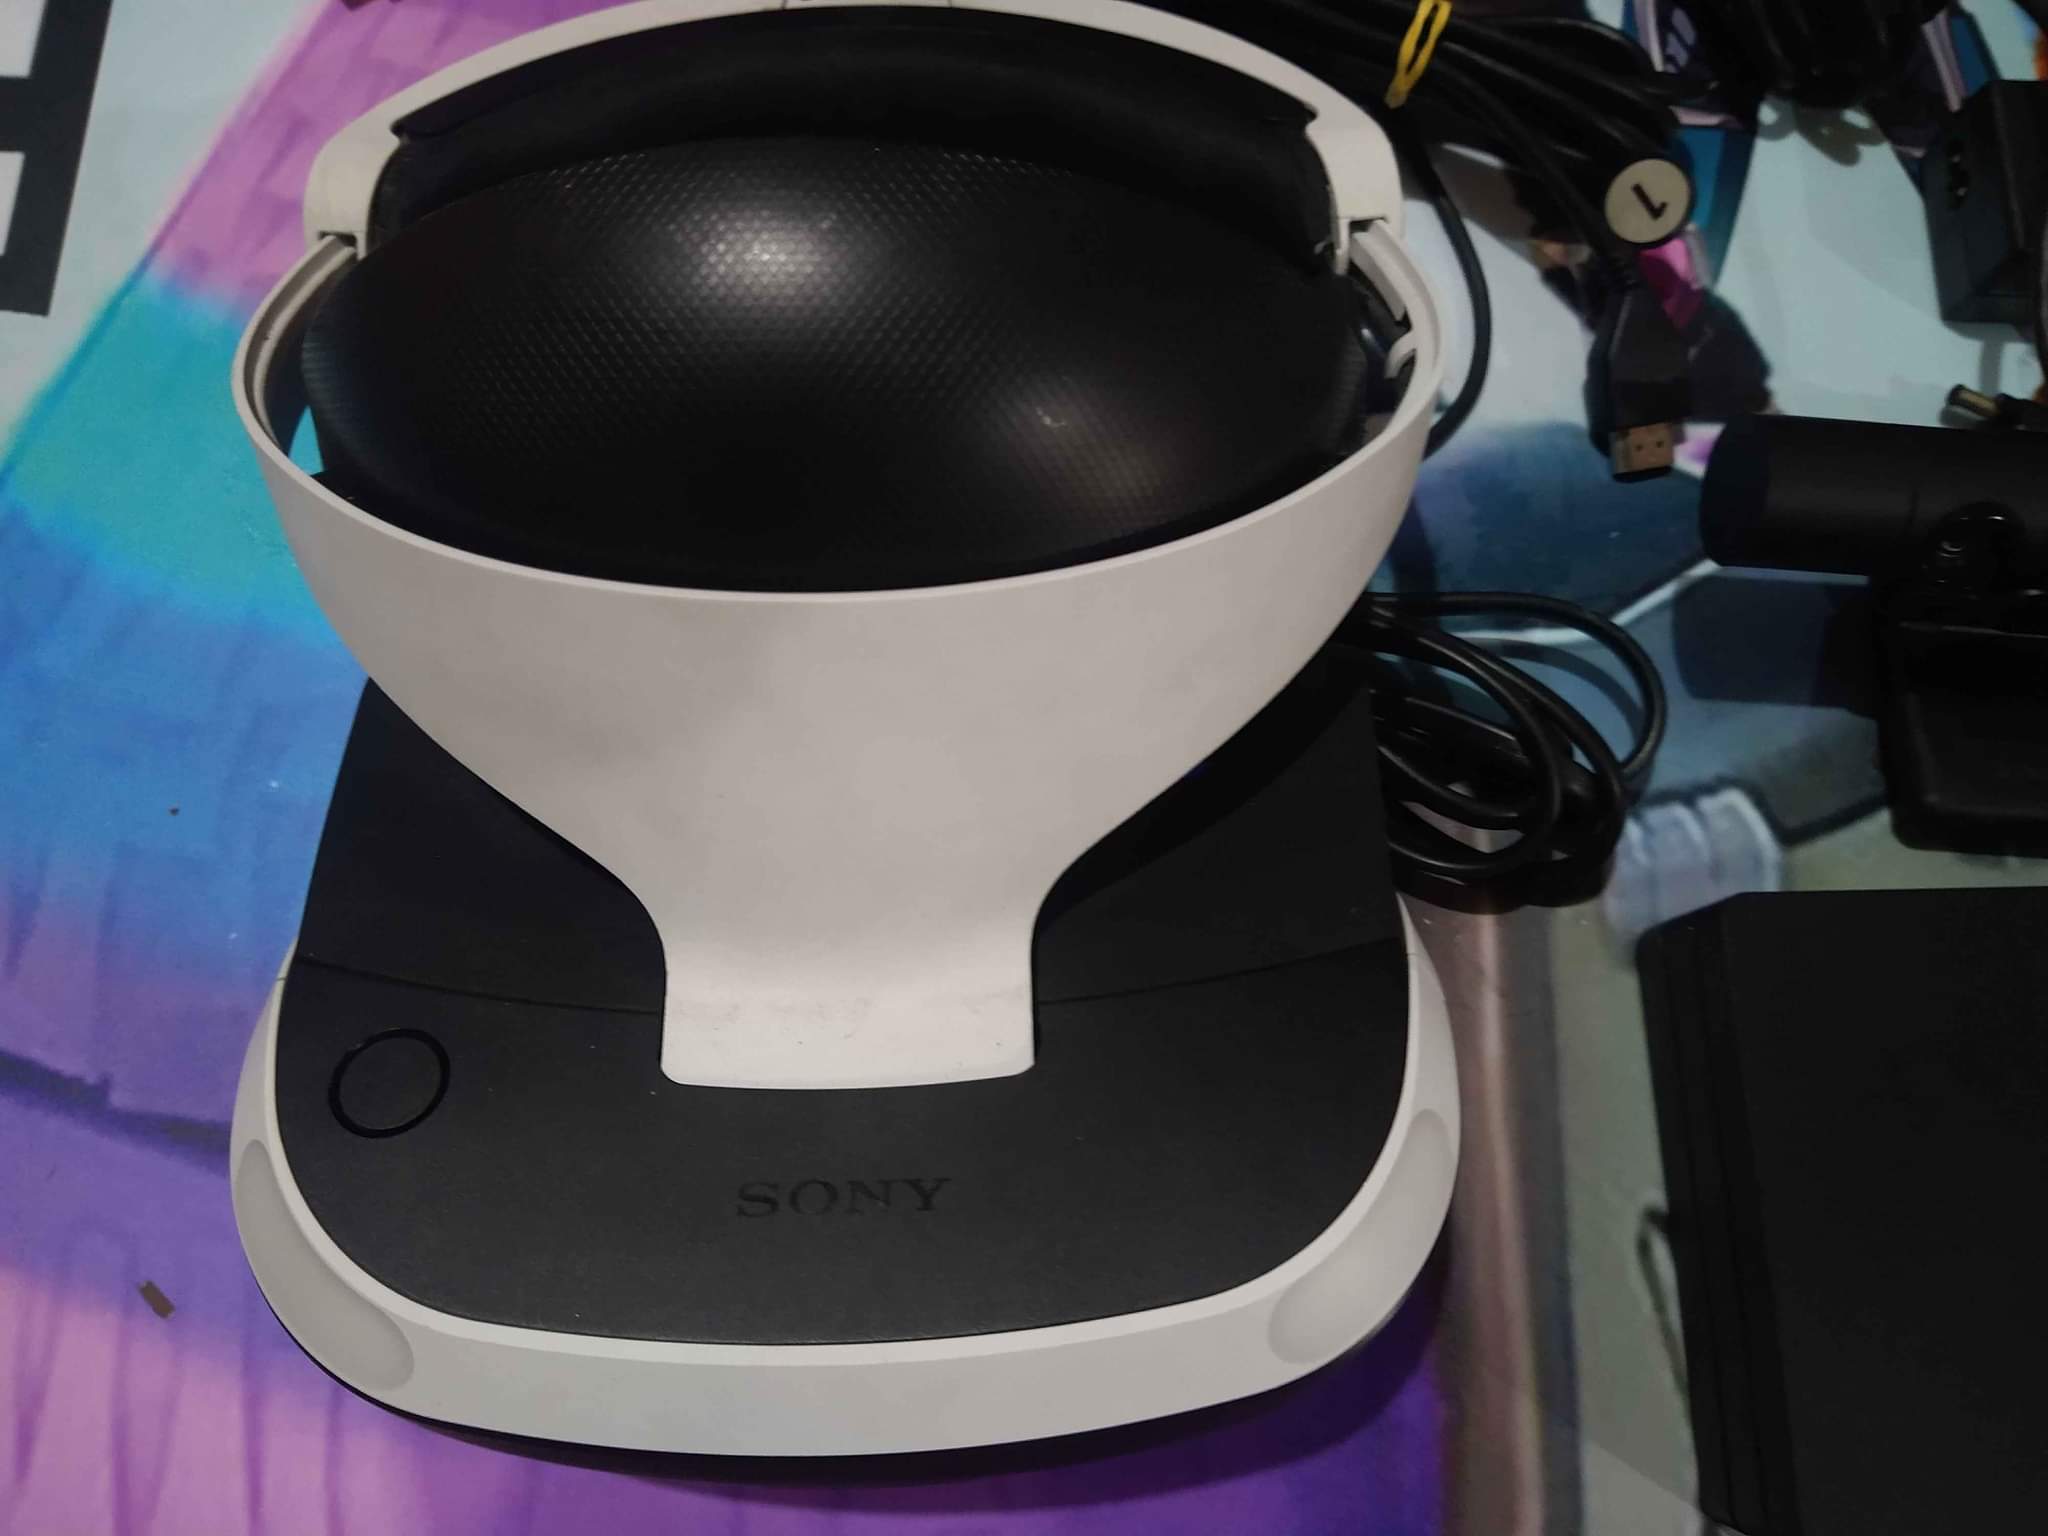 Sistema de realidad virtual play station 4, PS4 VR vendo o cambio por laptop, celular